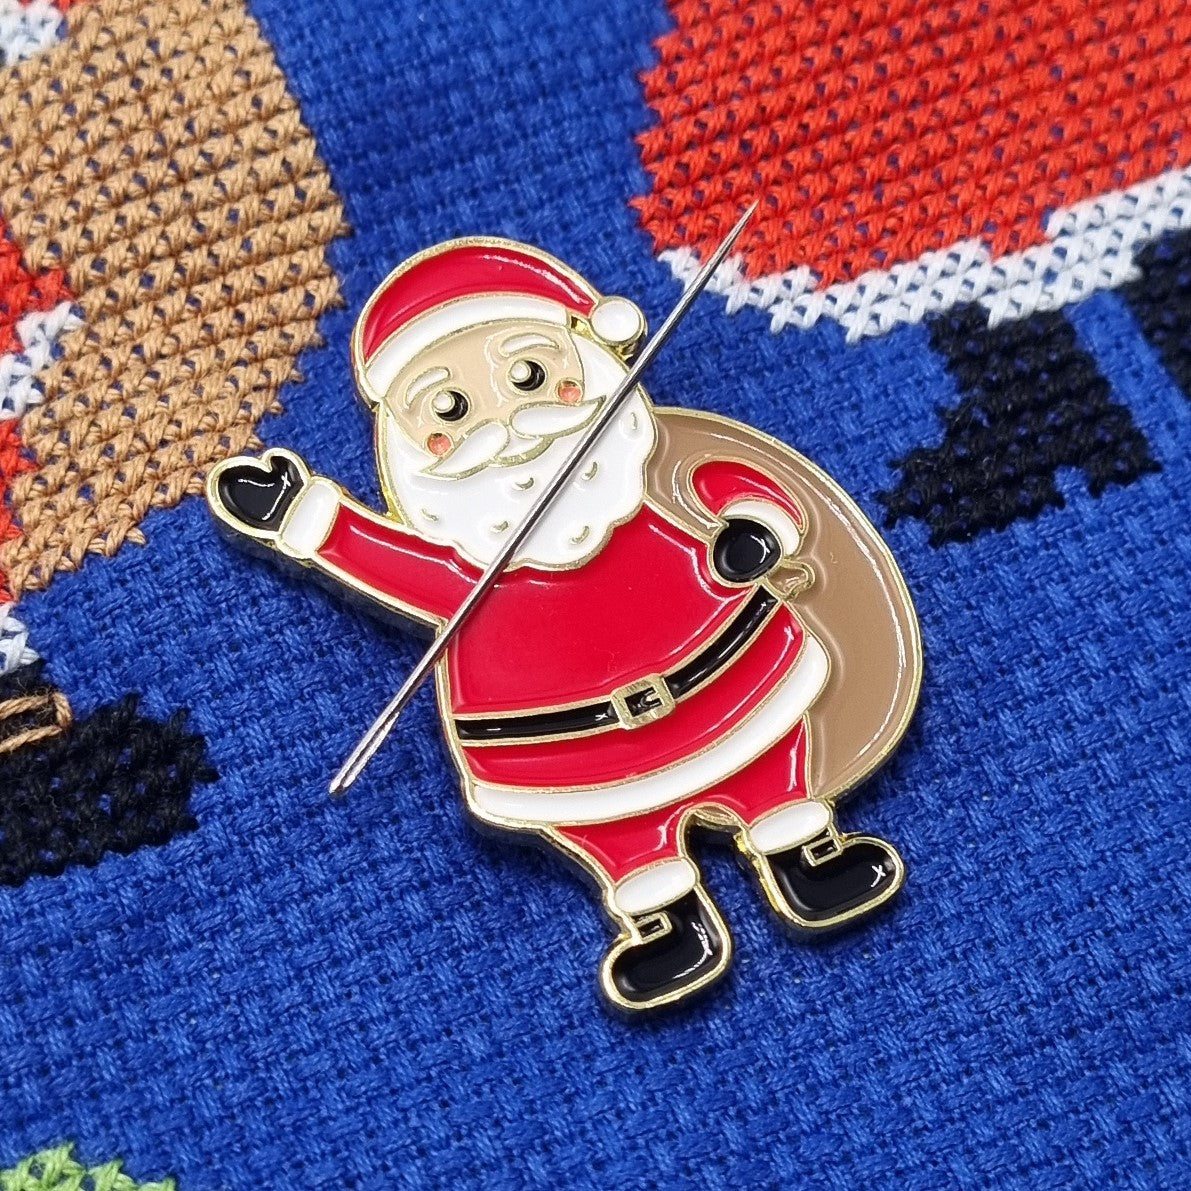 Christmas Tree Cross Stitch Kit